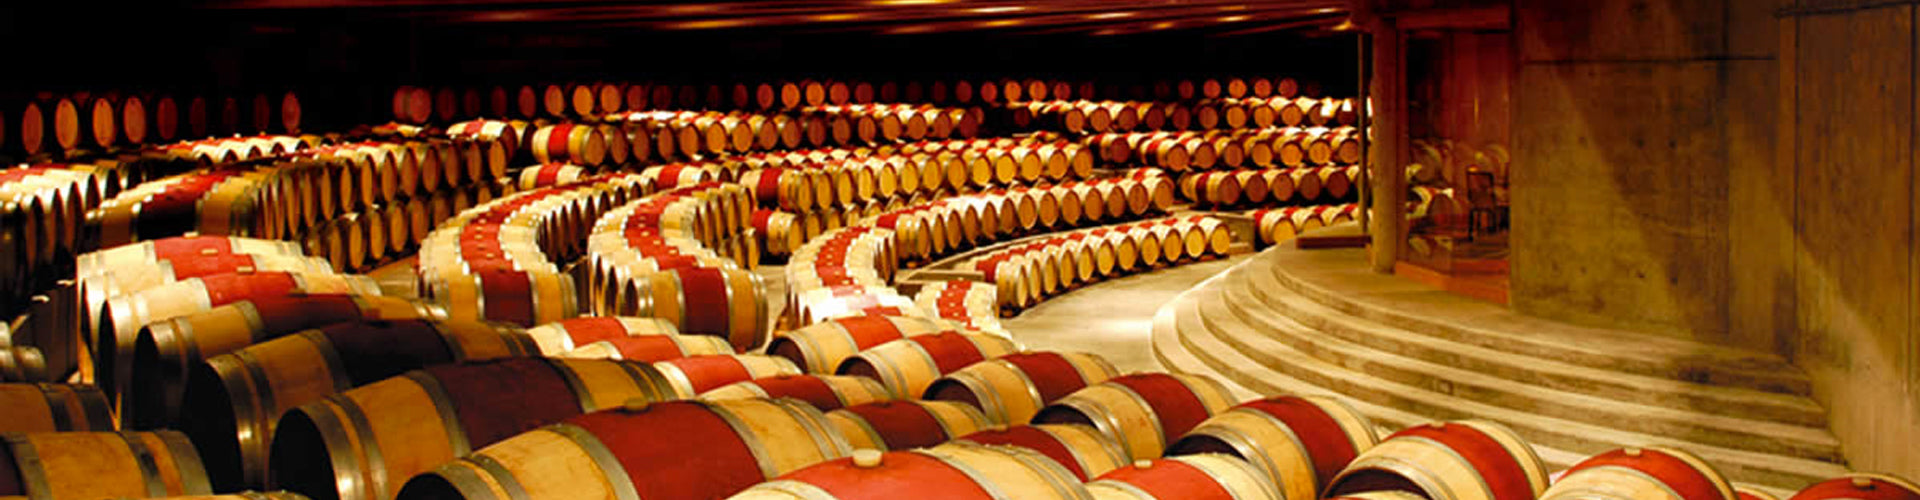 The Montes Wines Barrel Room